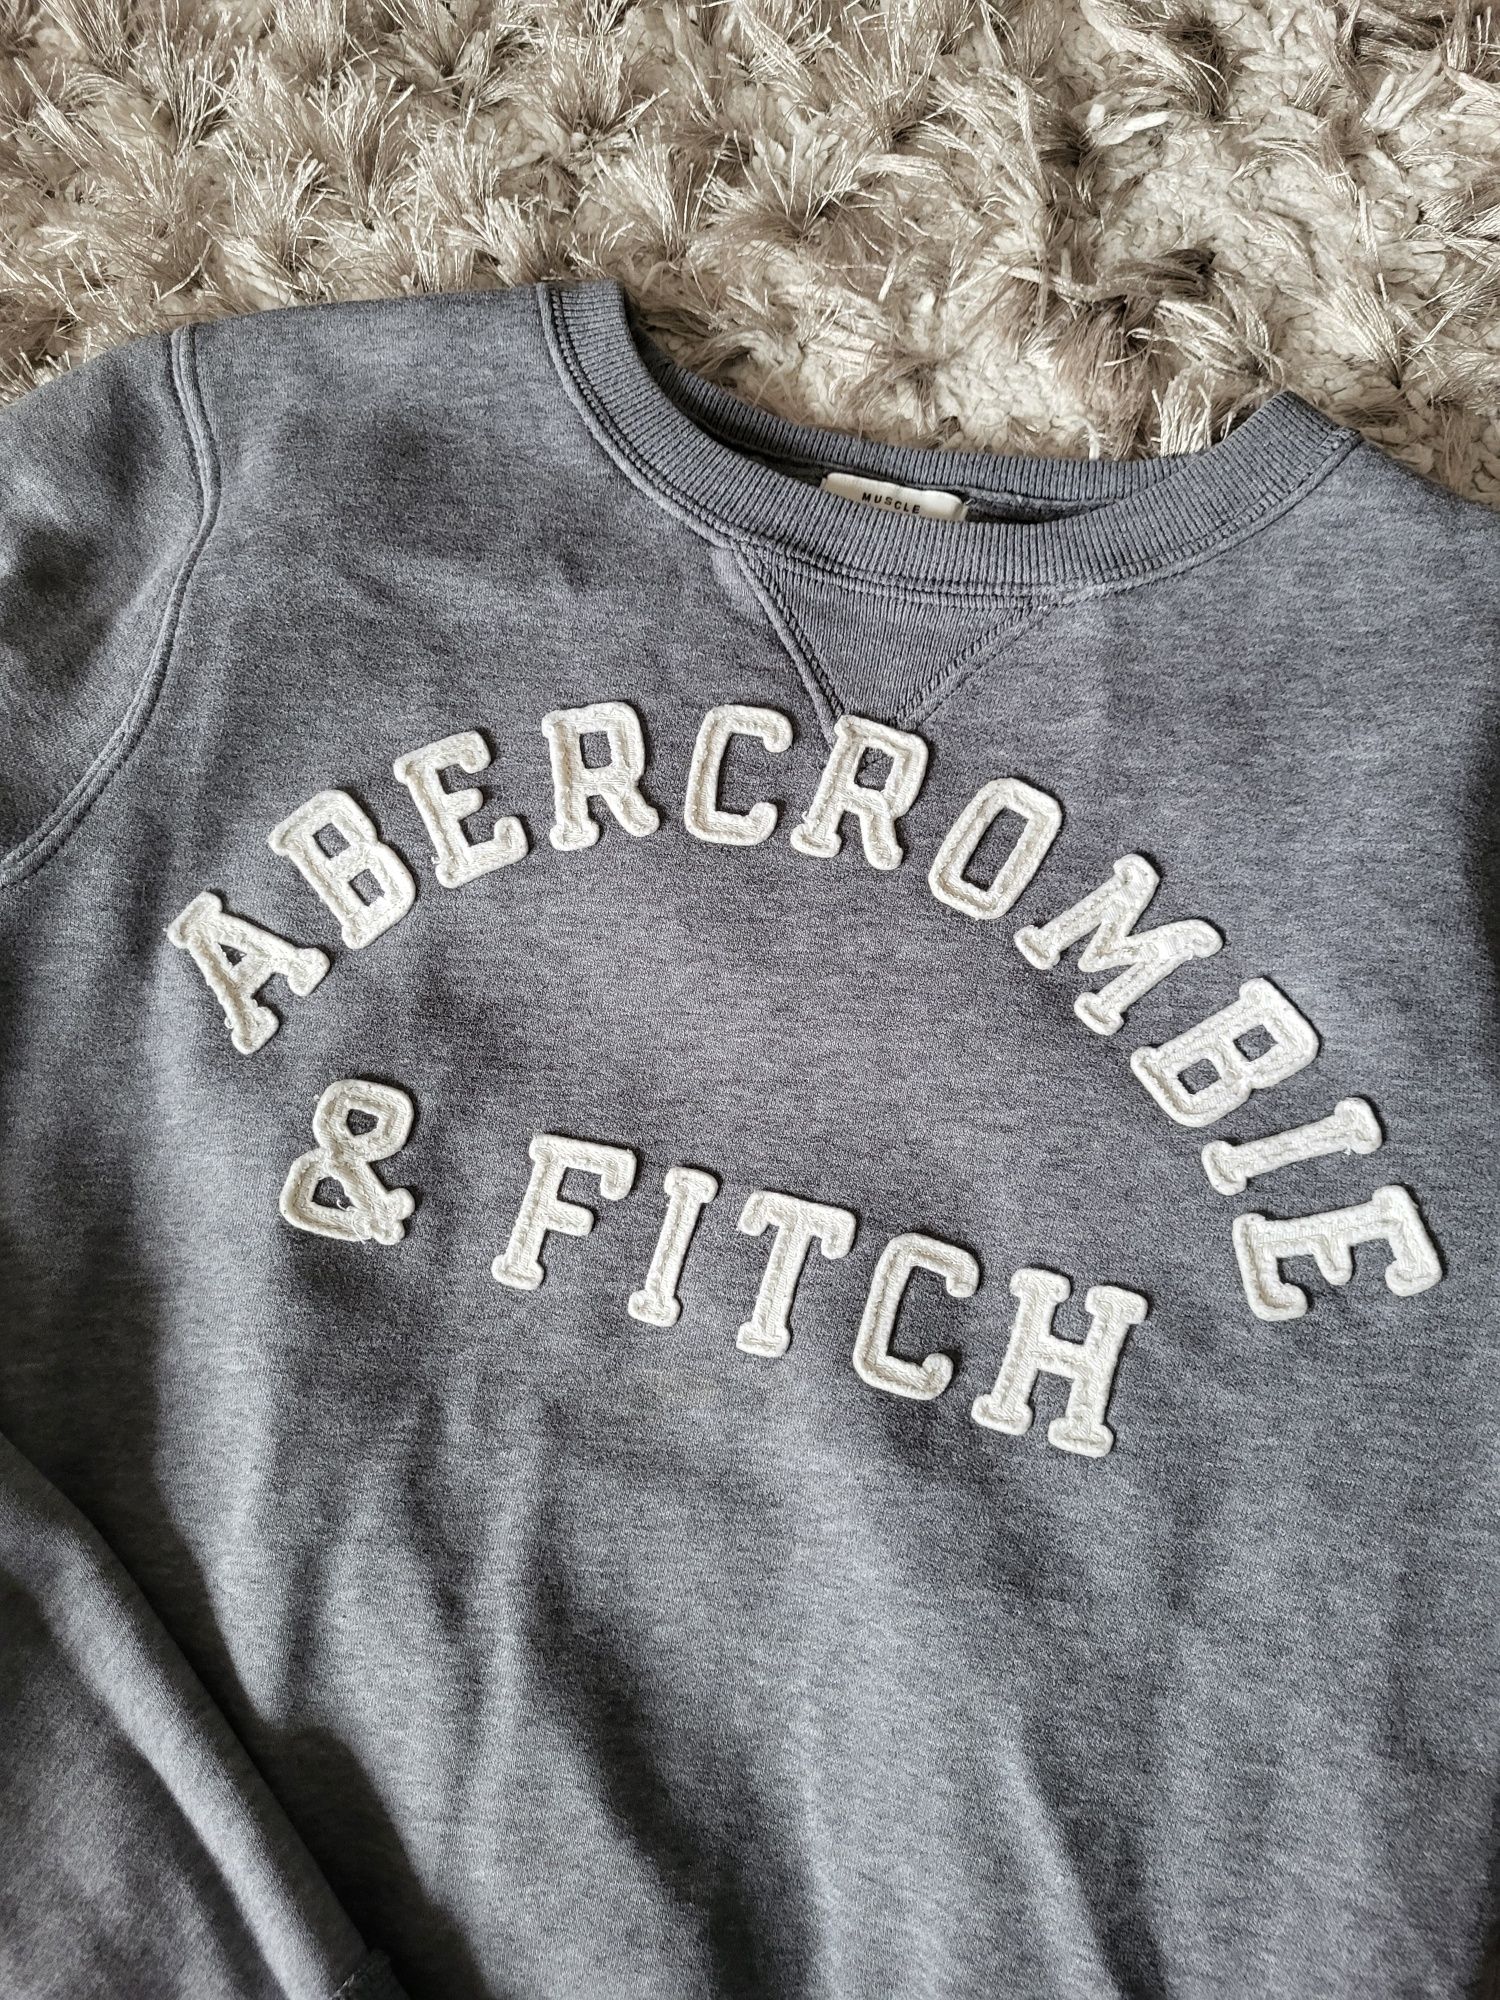 Bluza Abercrombie & Fitch gri XL barbati